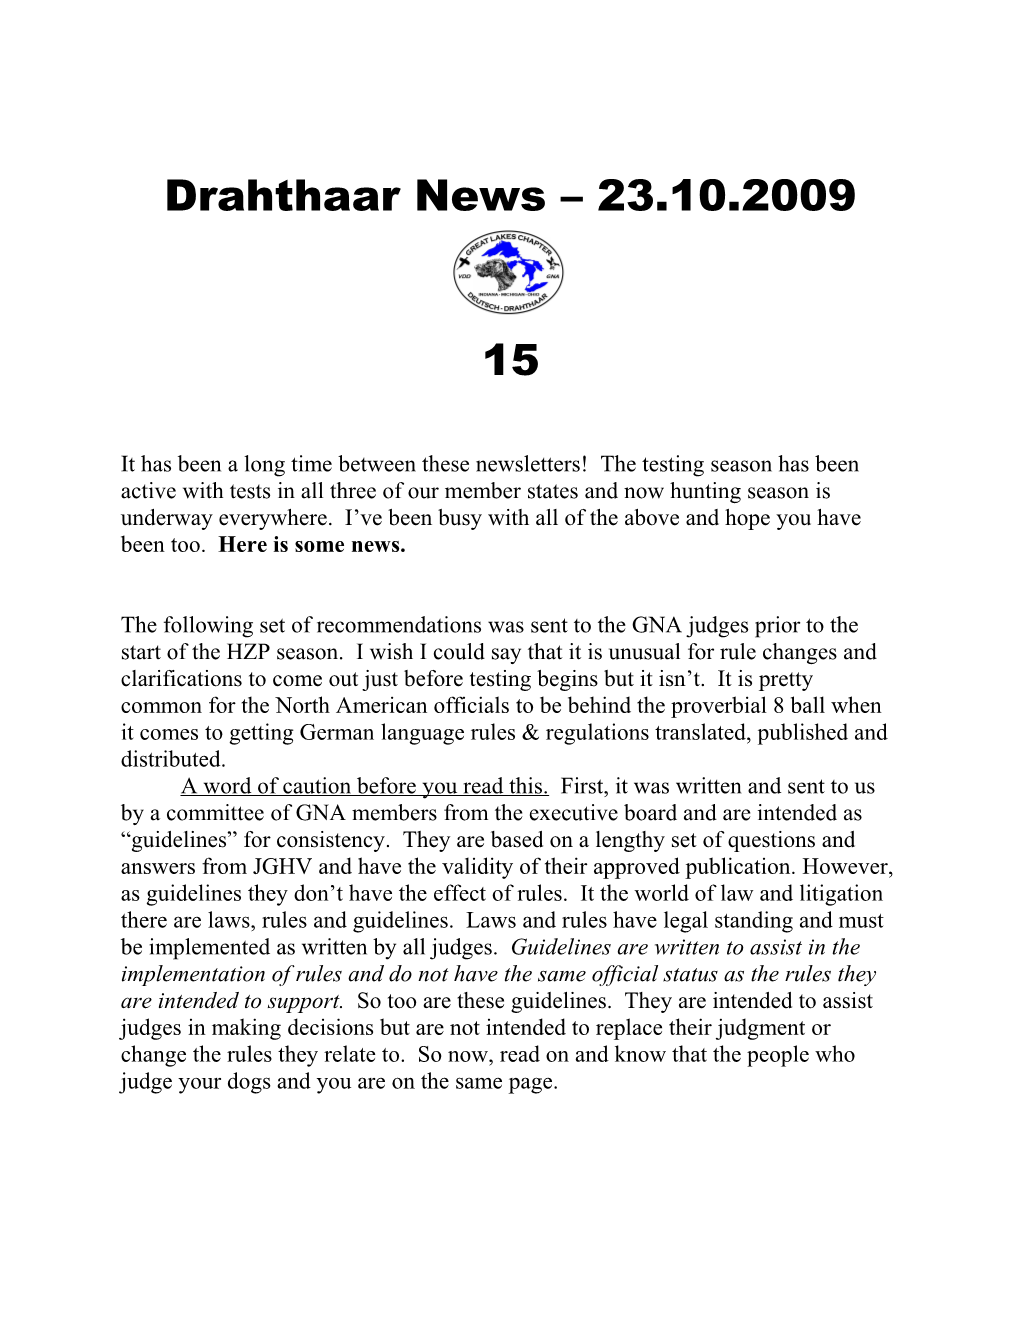 Drahthaar News 23.10.2009